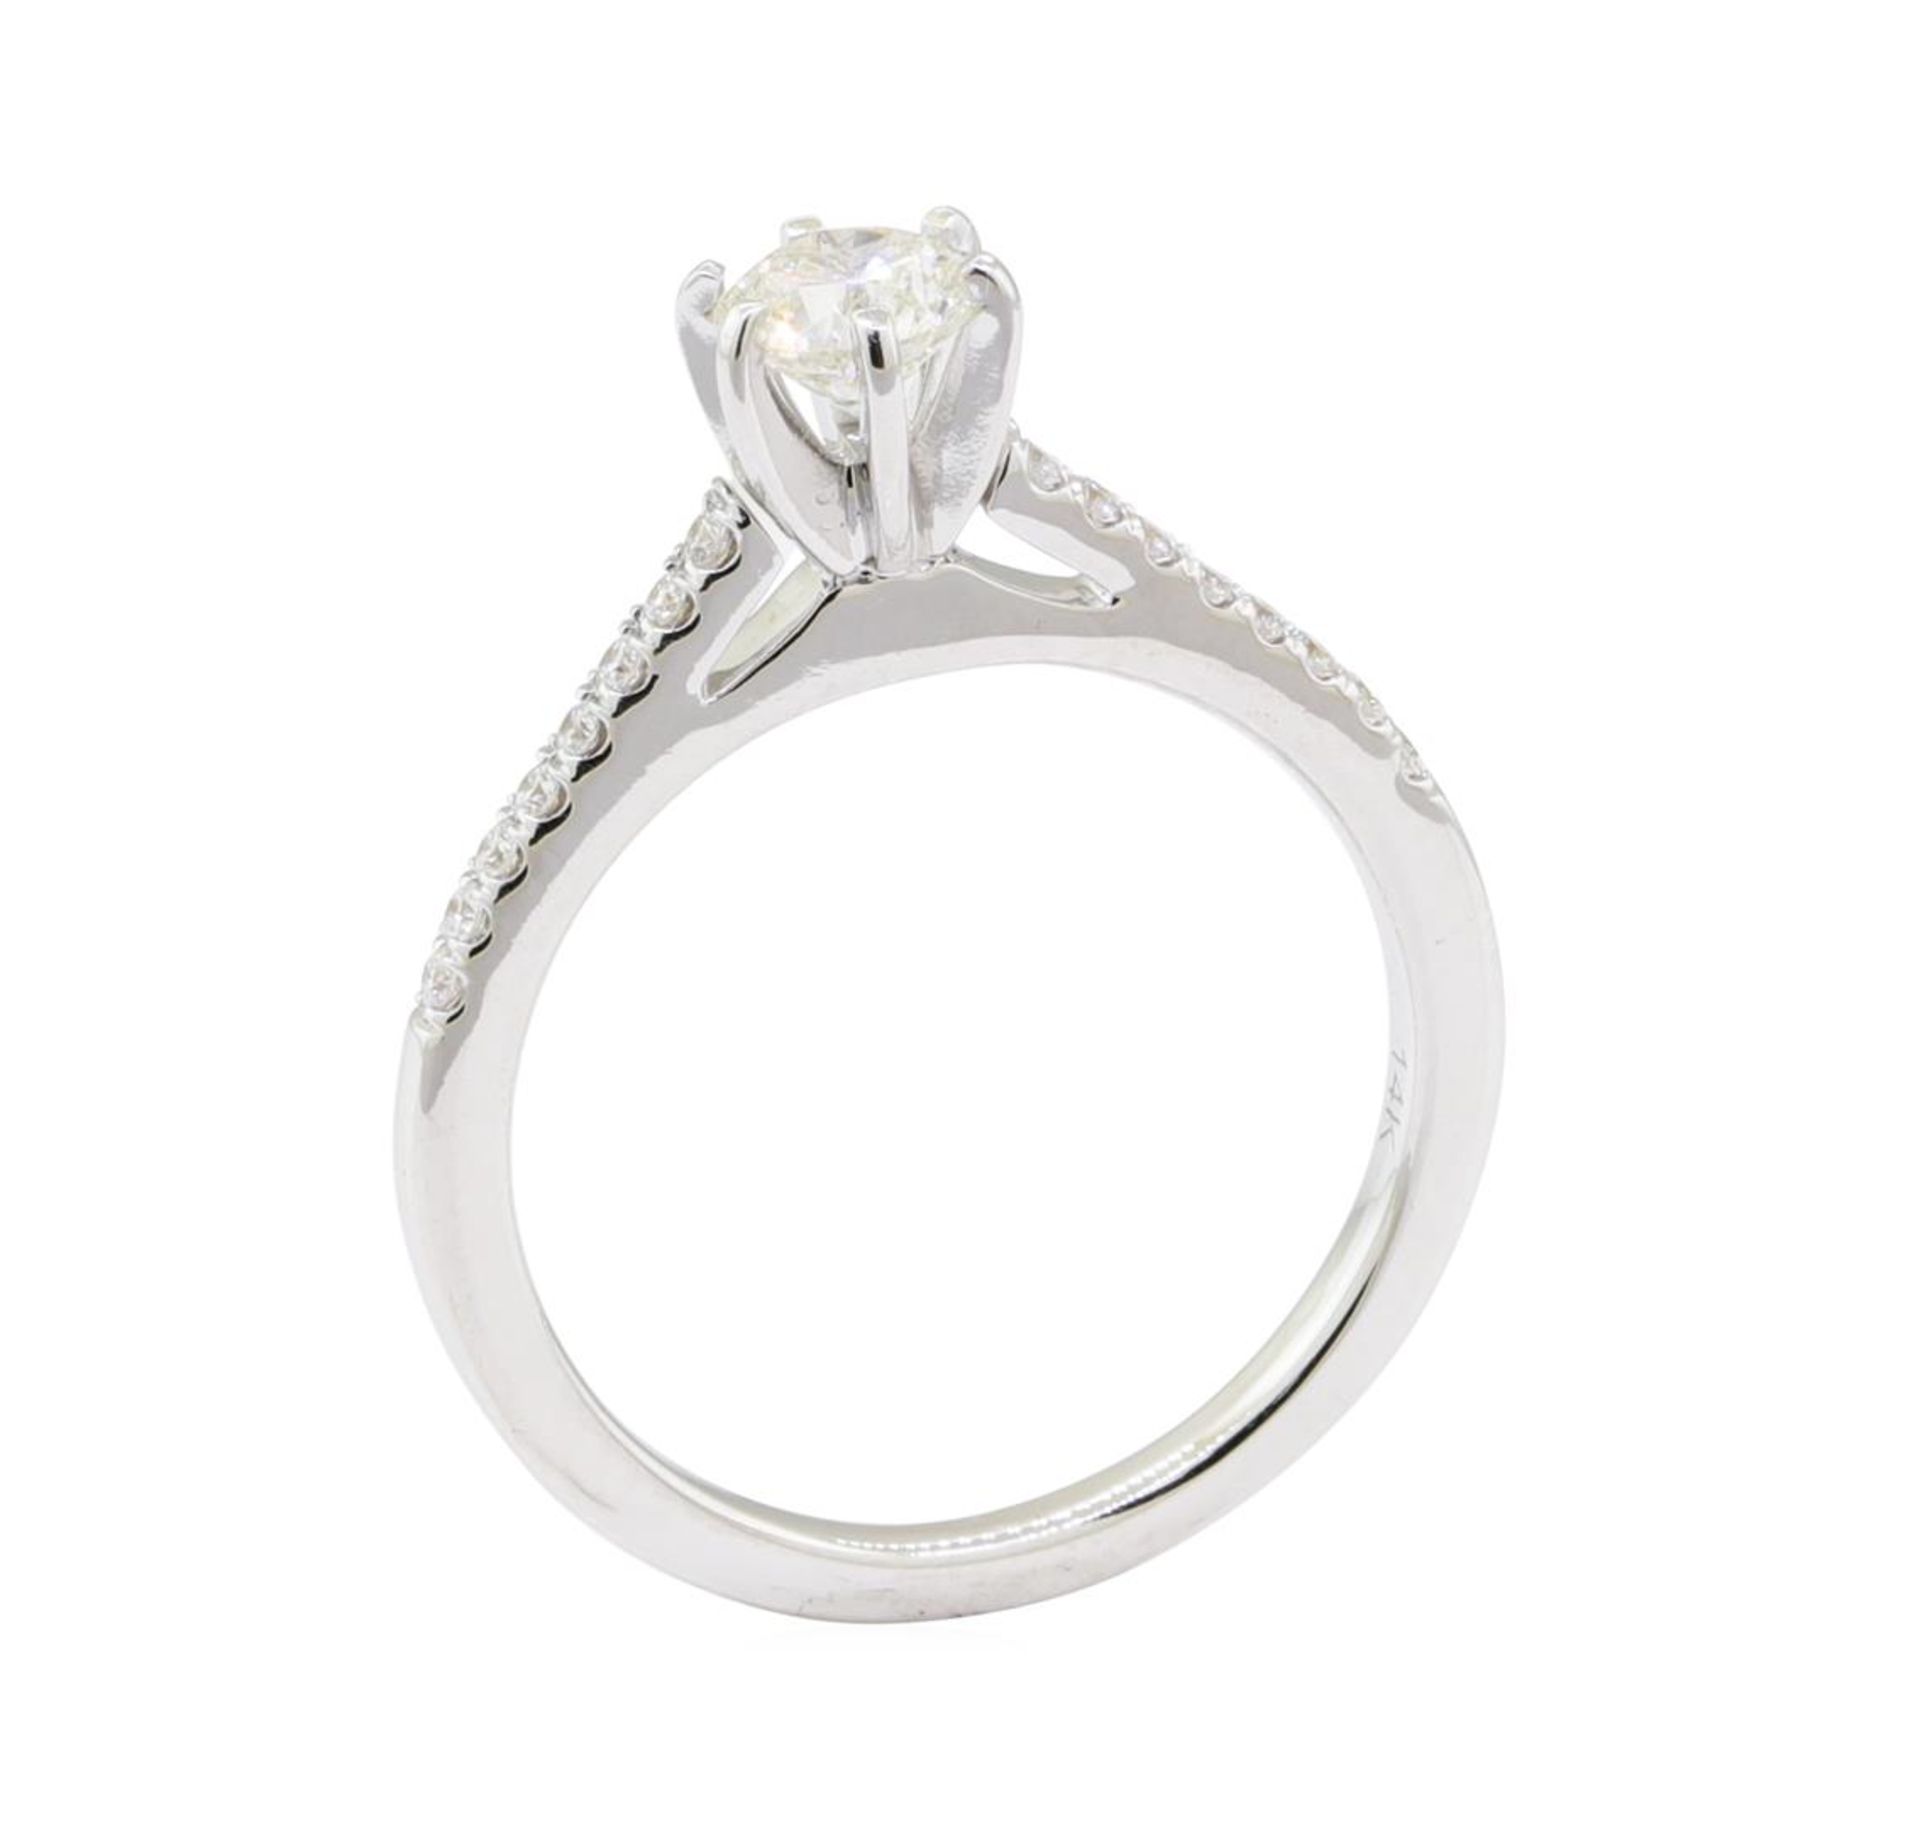 0.65 ctw Diamond Ring - 14KT White Gold - Image 4 of 4